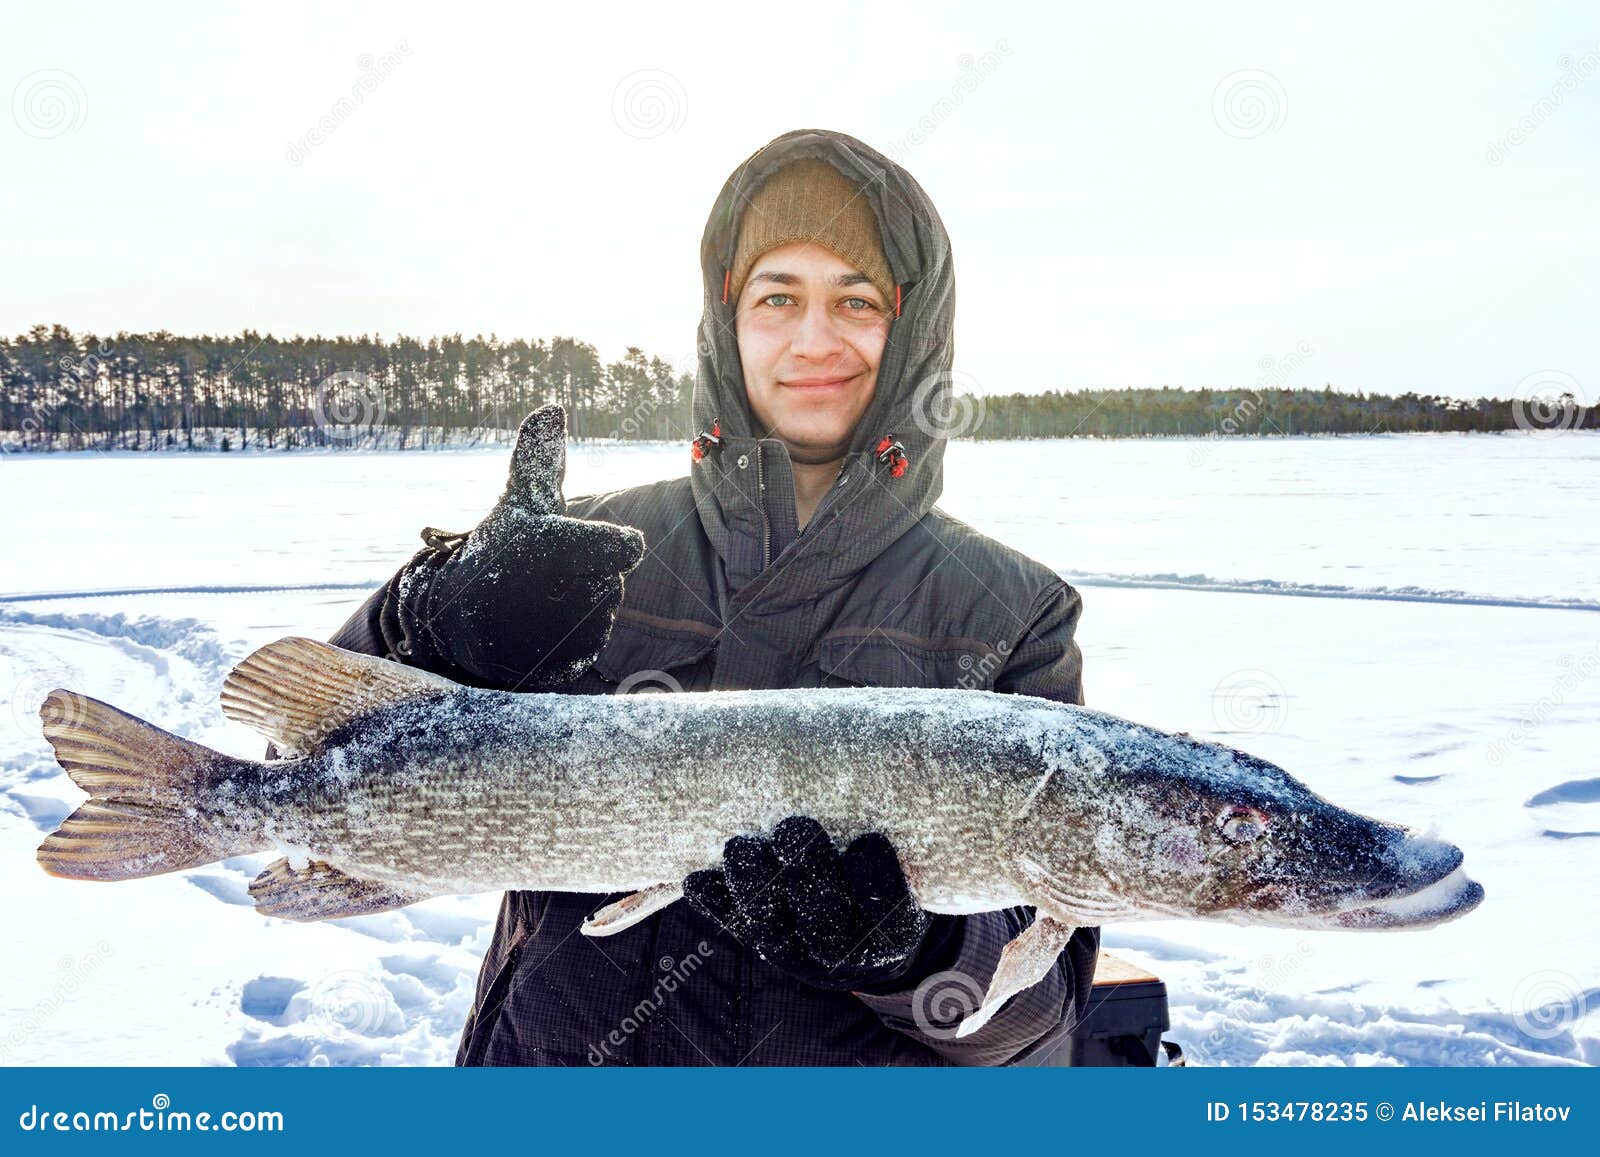 Northern pike ice fishing Stock Photos, Royalty Free Northern pike